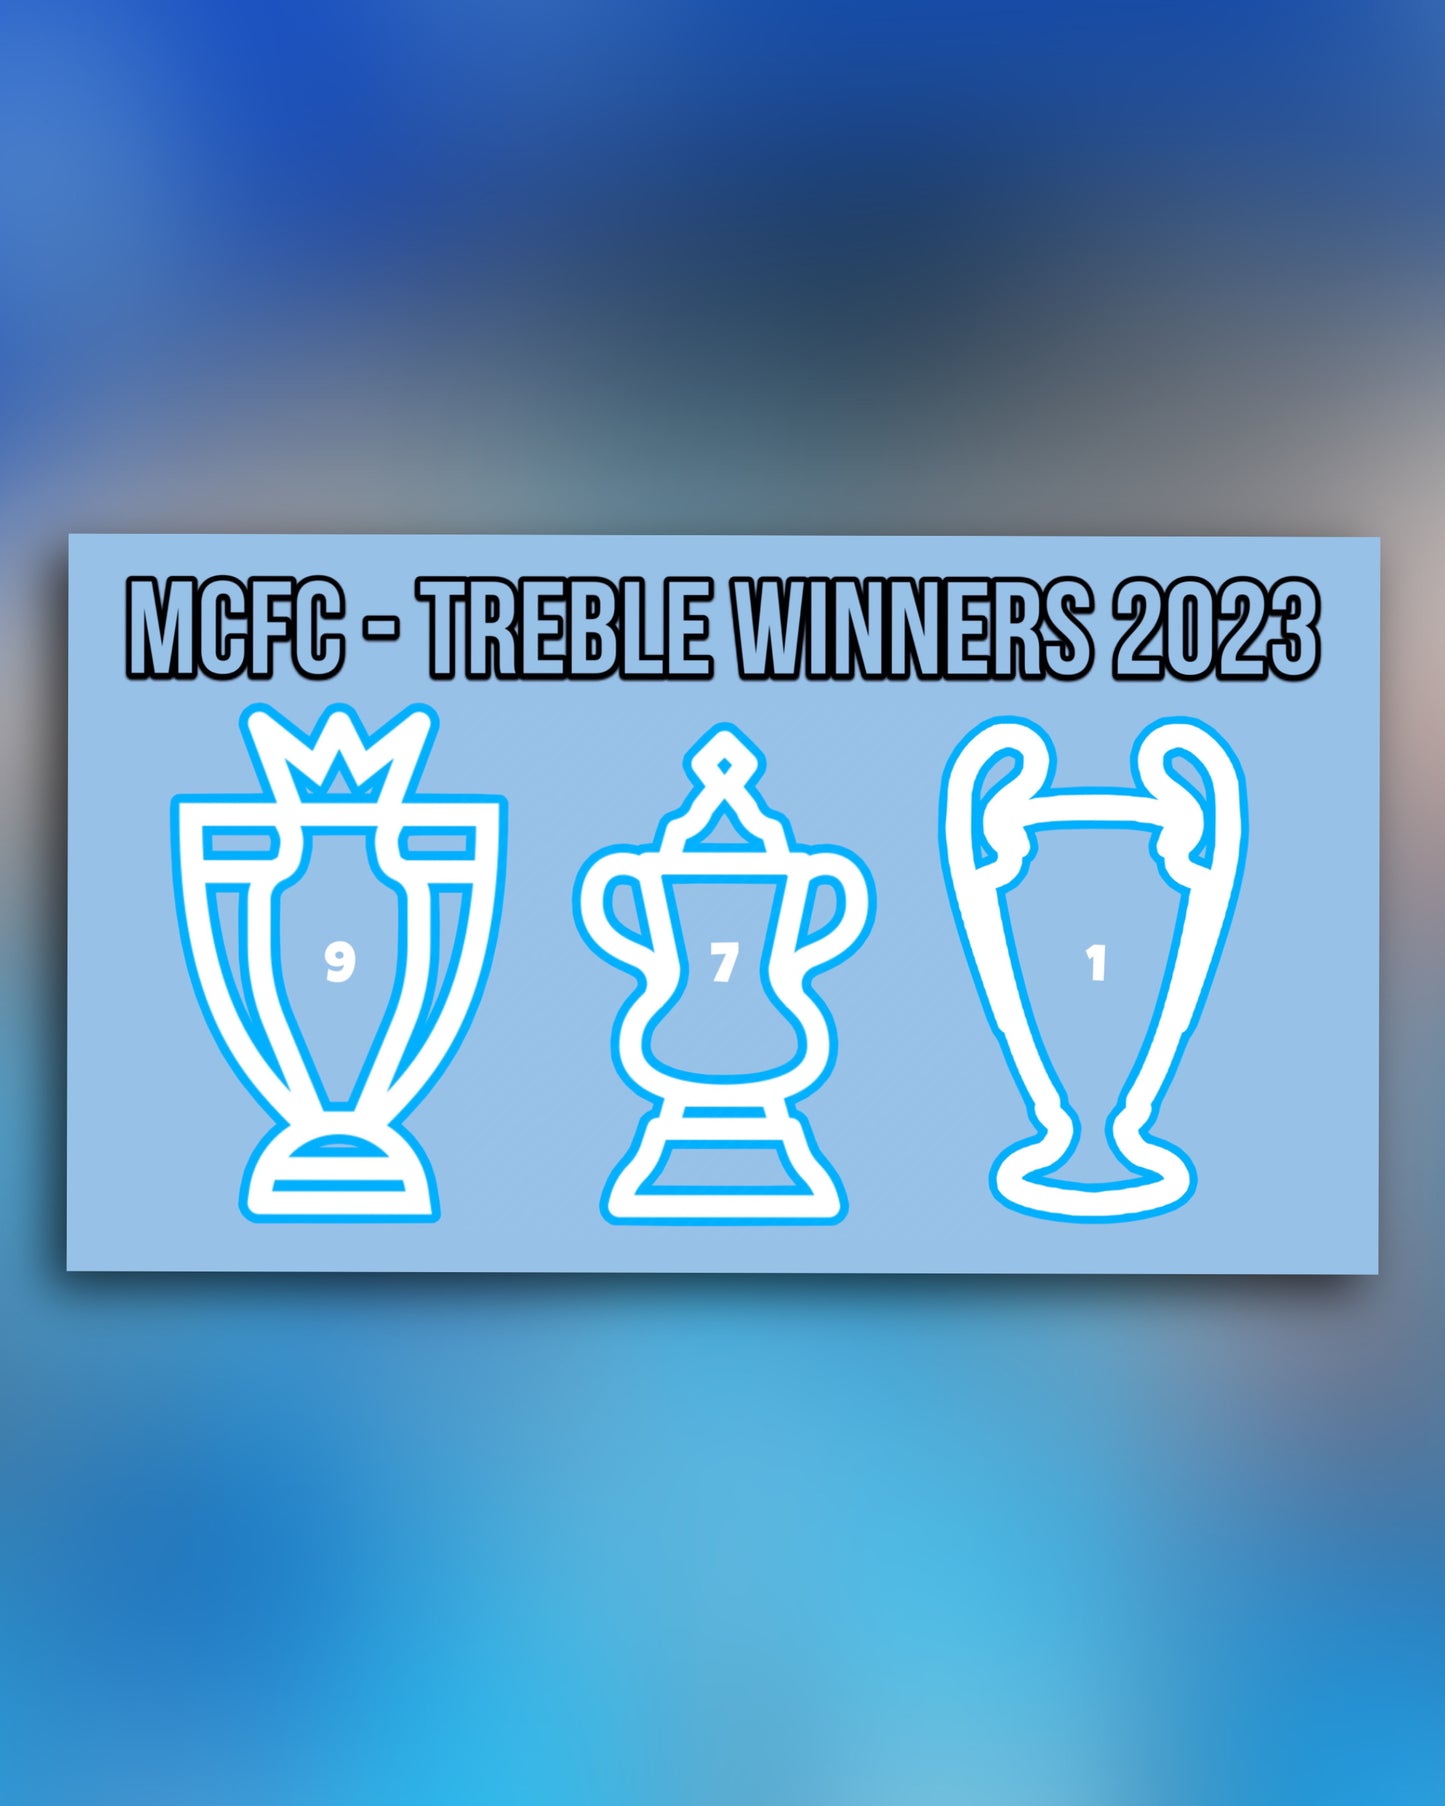 50x ‘TREBLE WINNERS’ Manchester City Stickers.